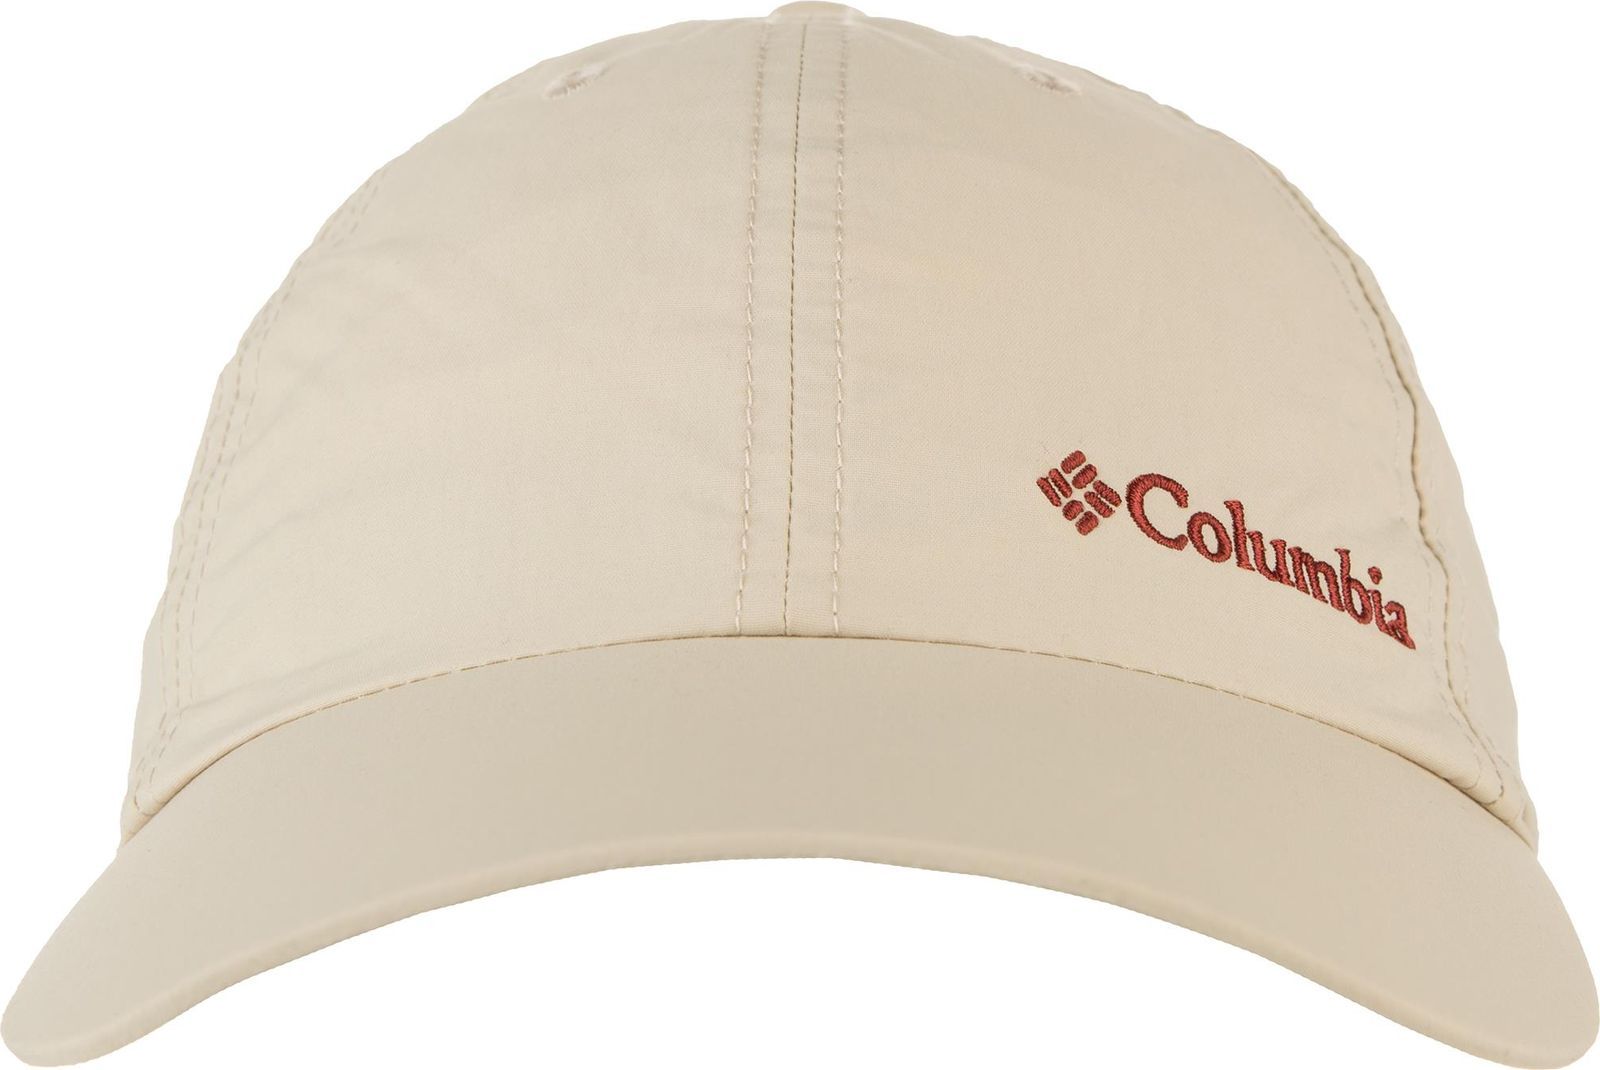  Columbia Tech Shade II Hat, : . 1819641-160.  